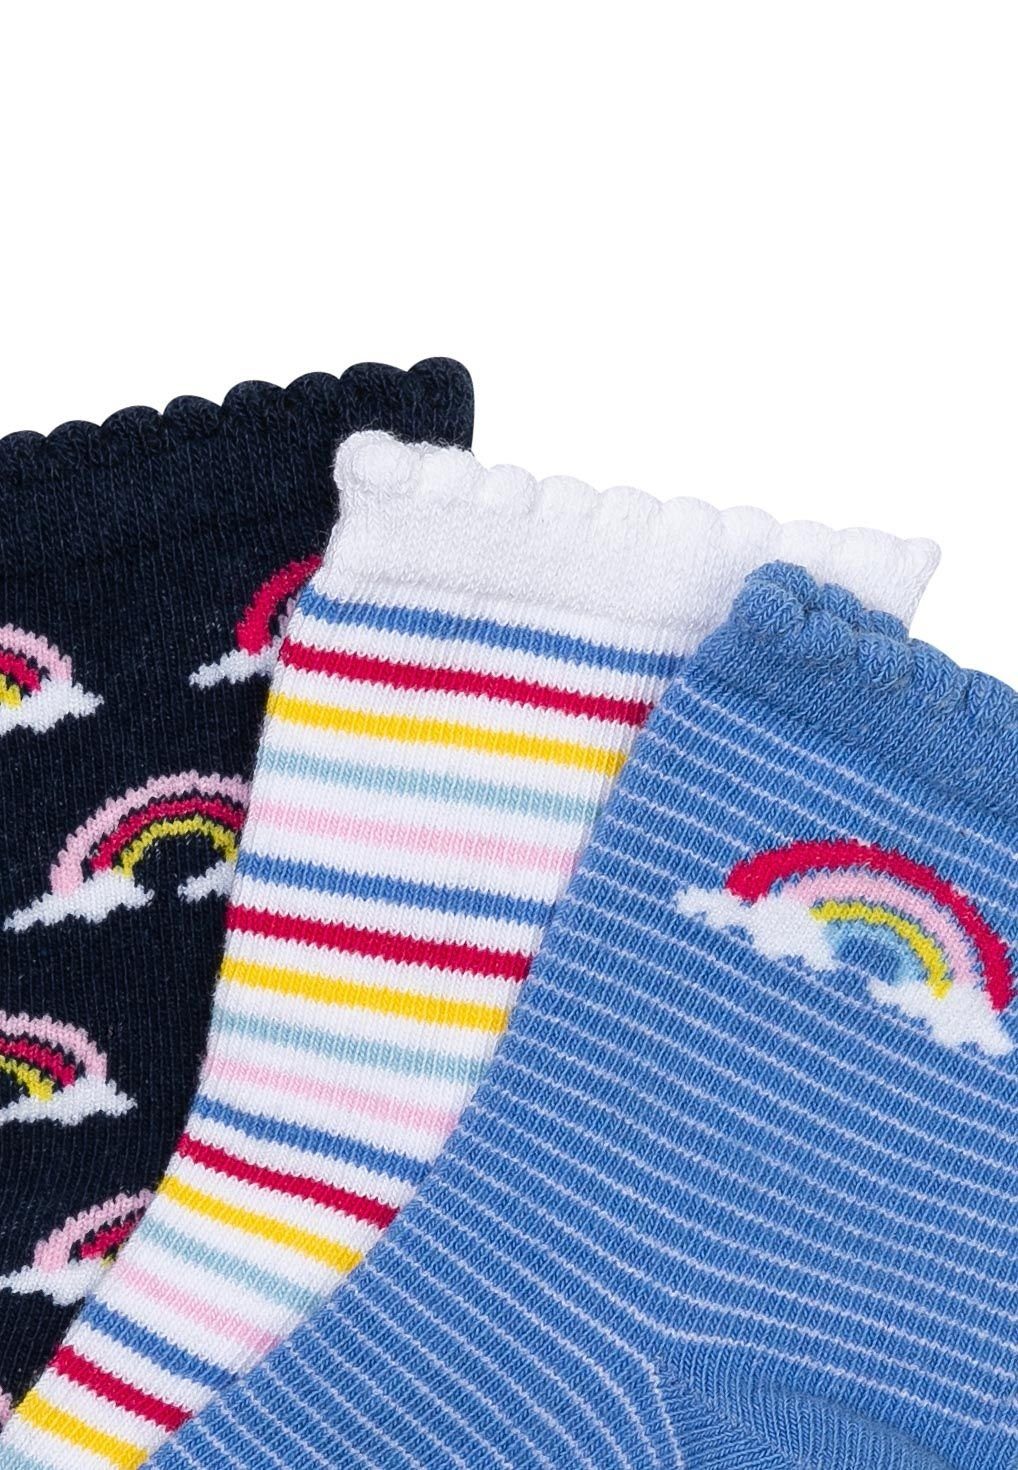 Socken (1y-8y) Blau 3 Kurzsocken Paar MINOTI